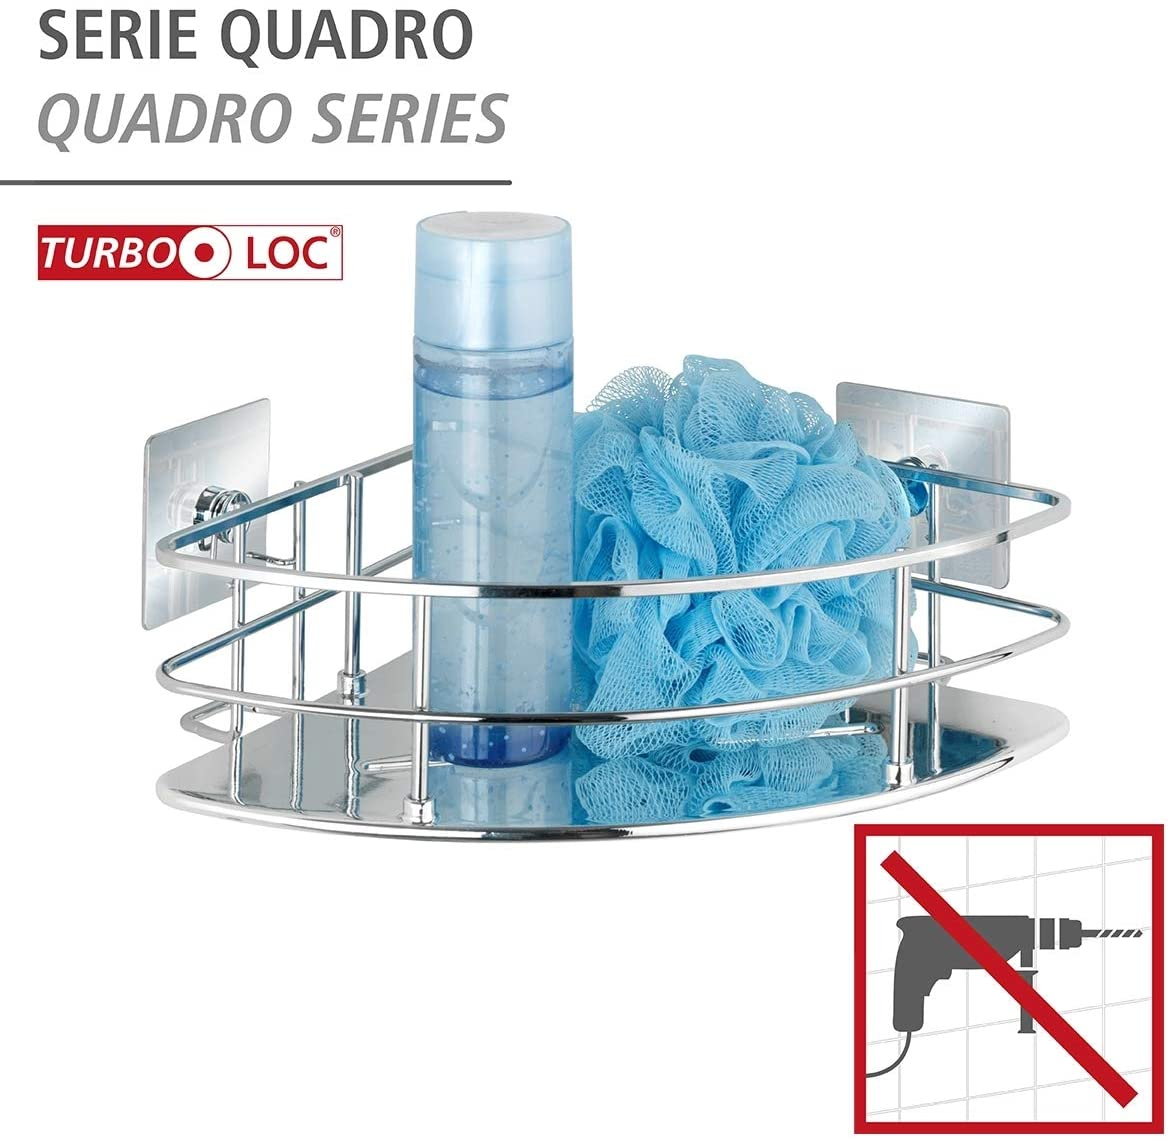 Turbo-Loc® Edelstahl Eckablage Quadro - Befestigen ohne bohren,Edelstahl rostfrei, 27.5 x 10 x 19.3 cm, Chrom